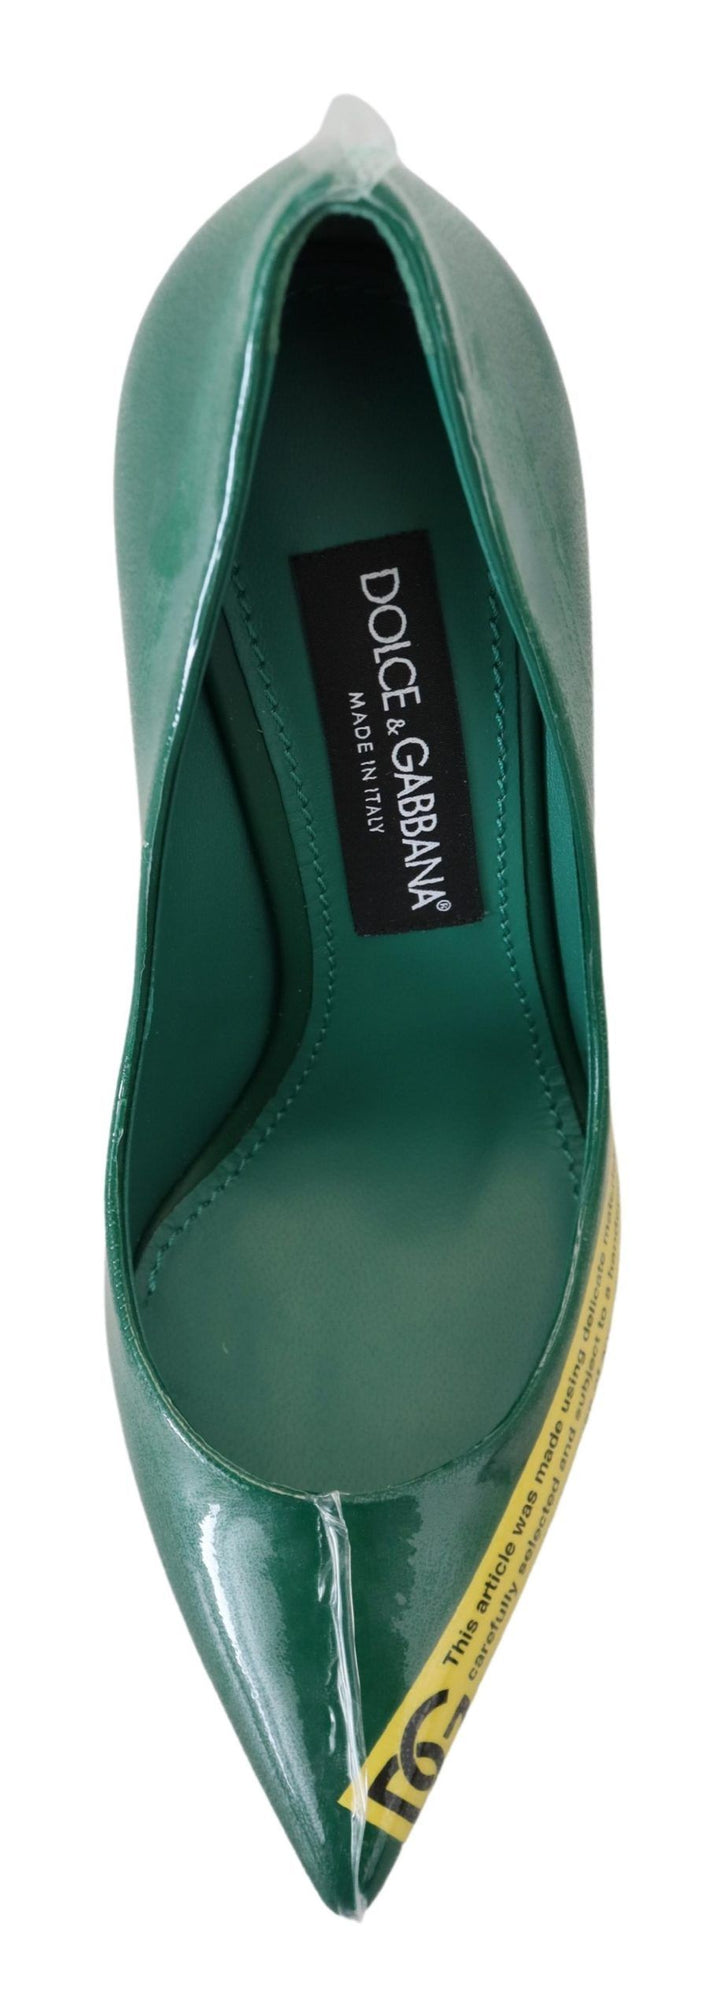 Dolce & Gabbana Emerald Elegance Leather Heels Pumps